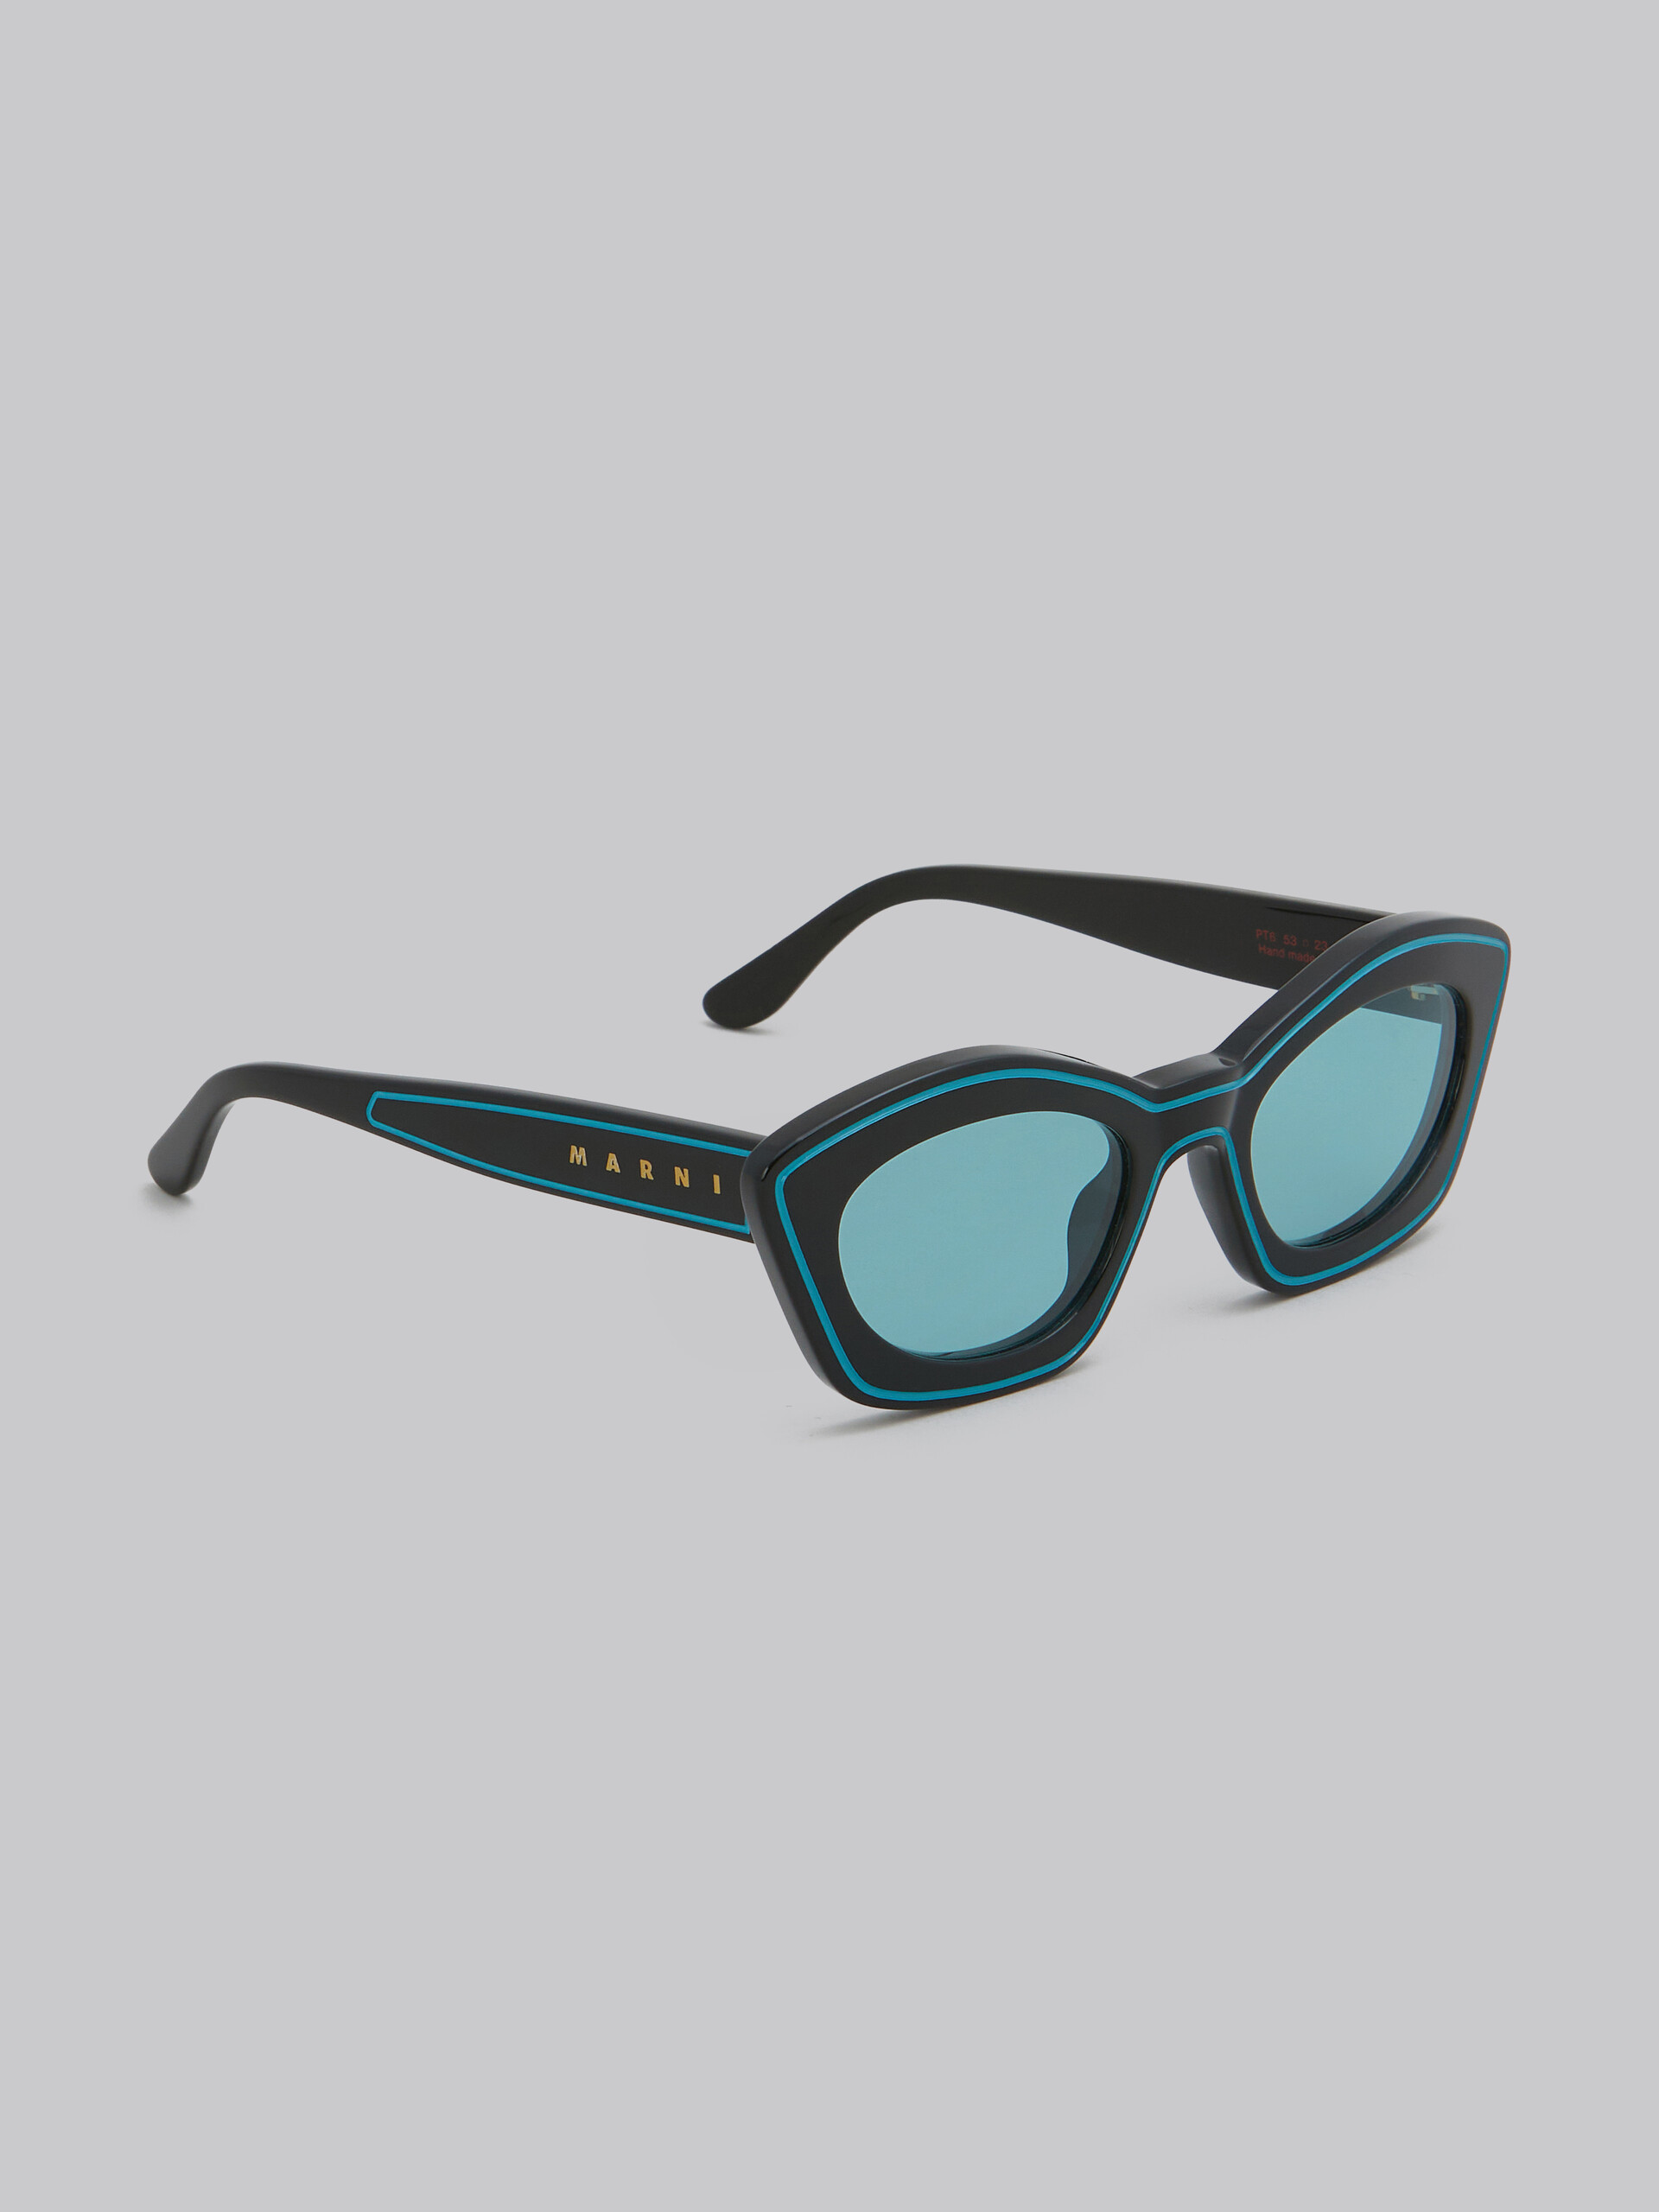 Blaugrüne Sonnenbrille Kea Island - Optisch - Image 3